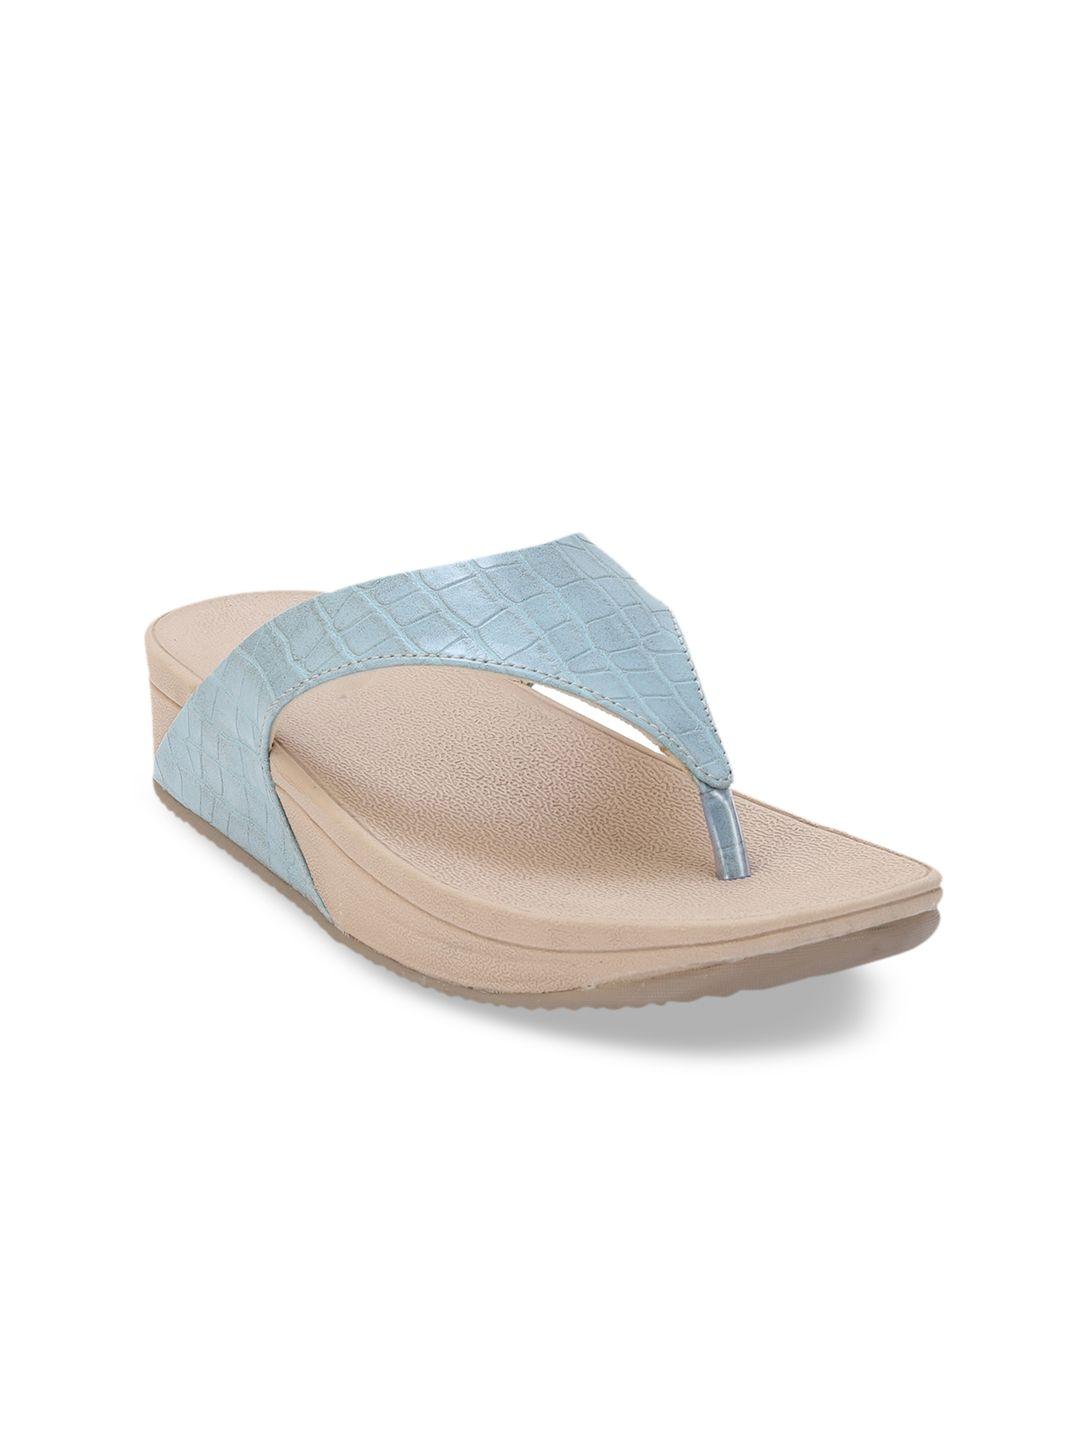 zyla women blue solid wedge sandals